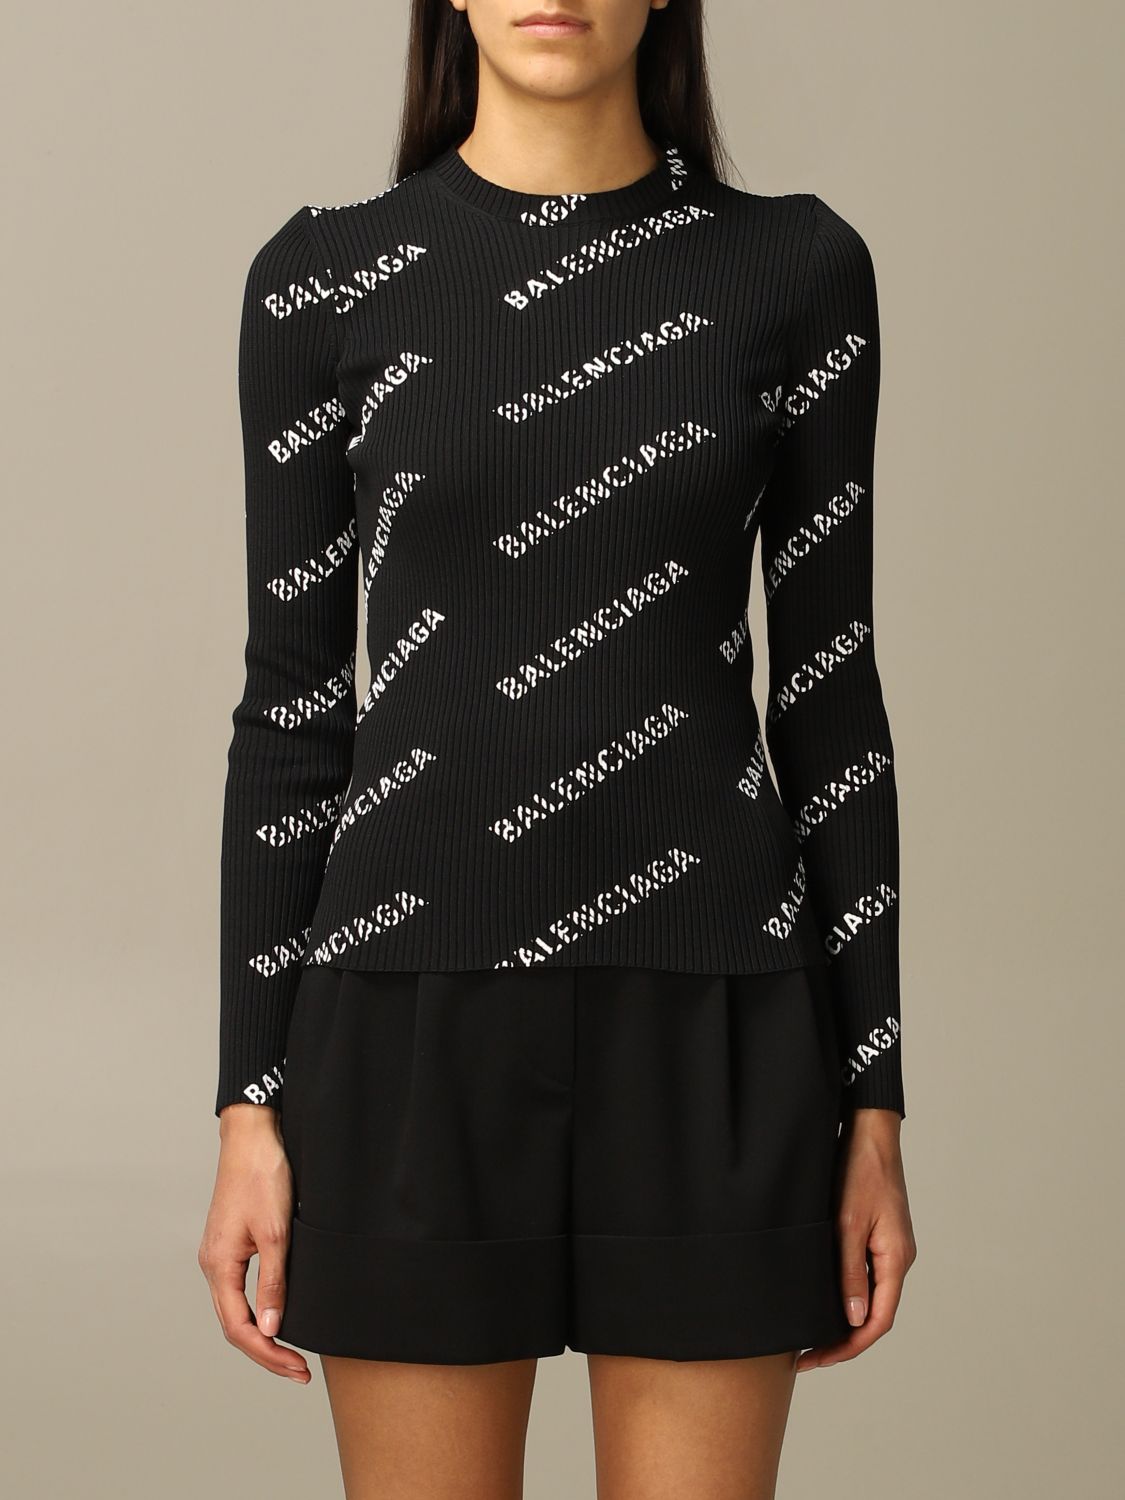 Balenciaga Long Sleeve Sweater Dresses for sale  eBay